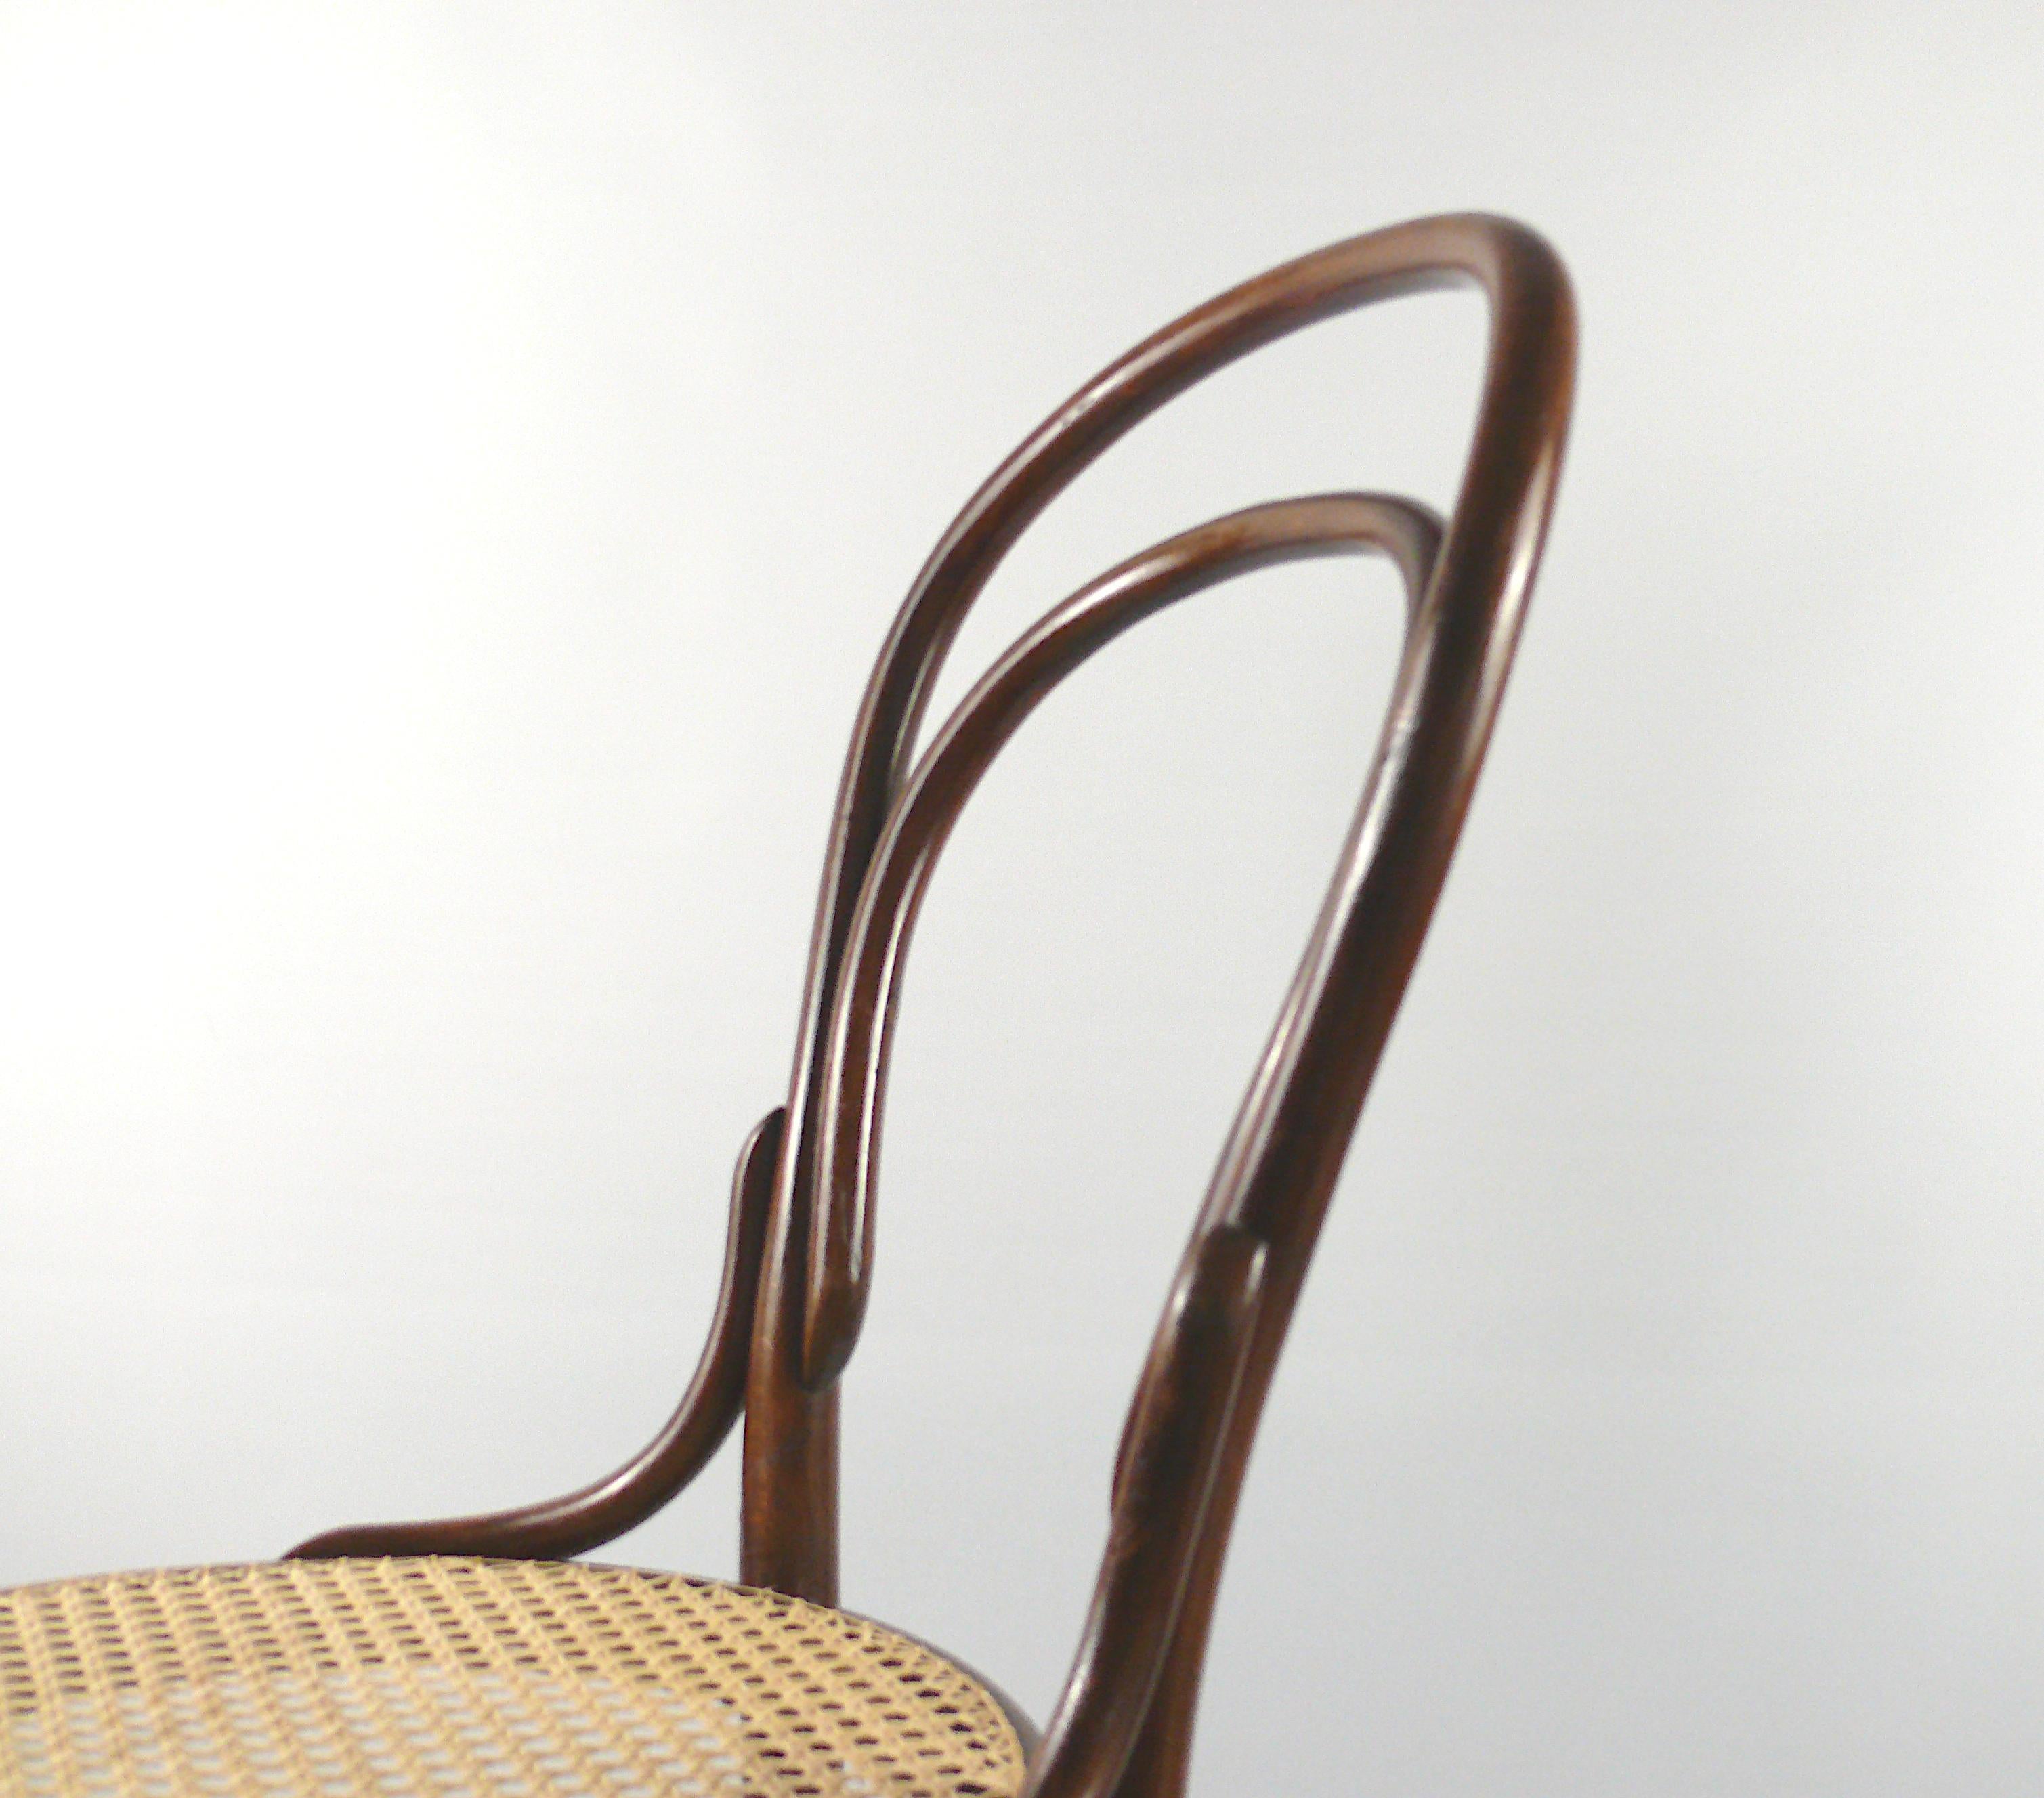 Organic Modern Set of 2 Original Thonet Bentwood Chairs No. 14, Late 19th